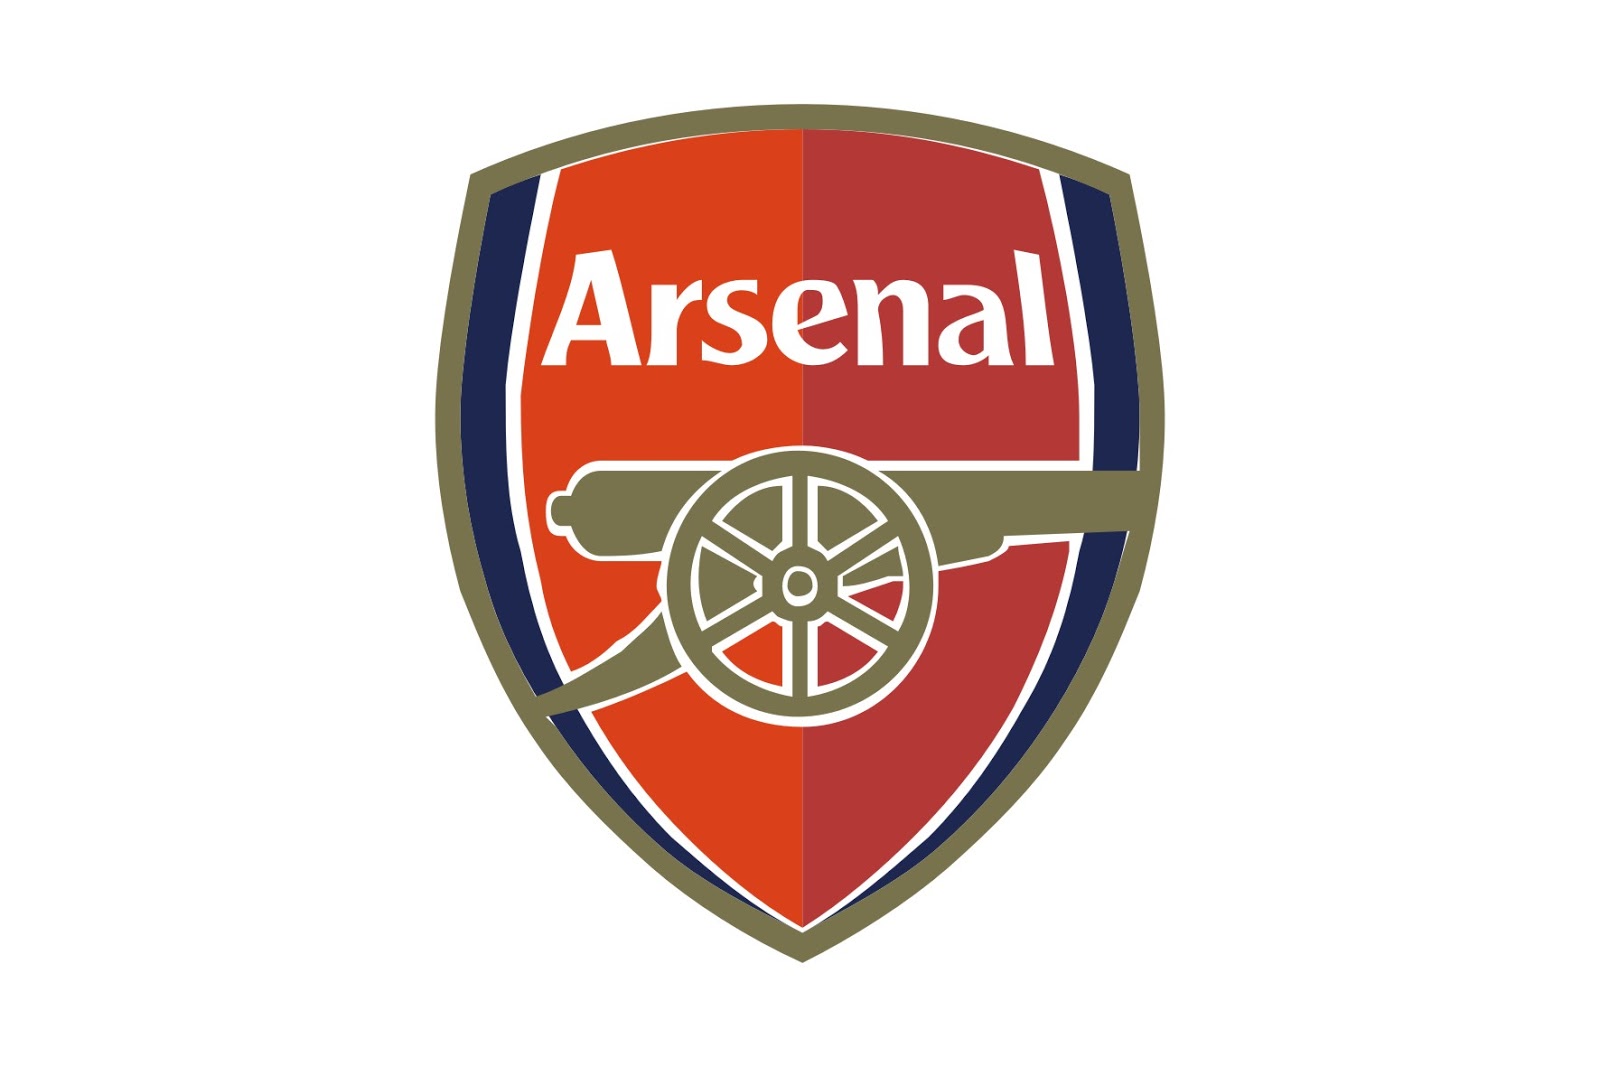 Arsenal Fc Logo Clipart - Arsenal Fc Vector, Transparent background PNG HD thumbnail